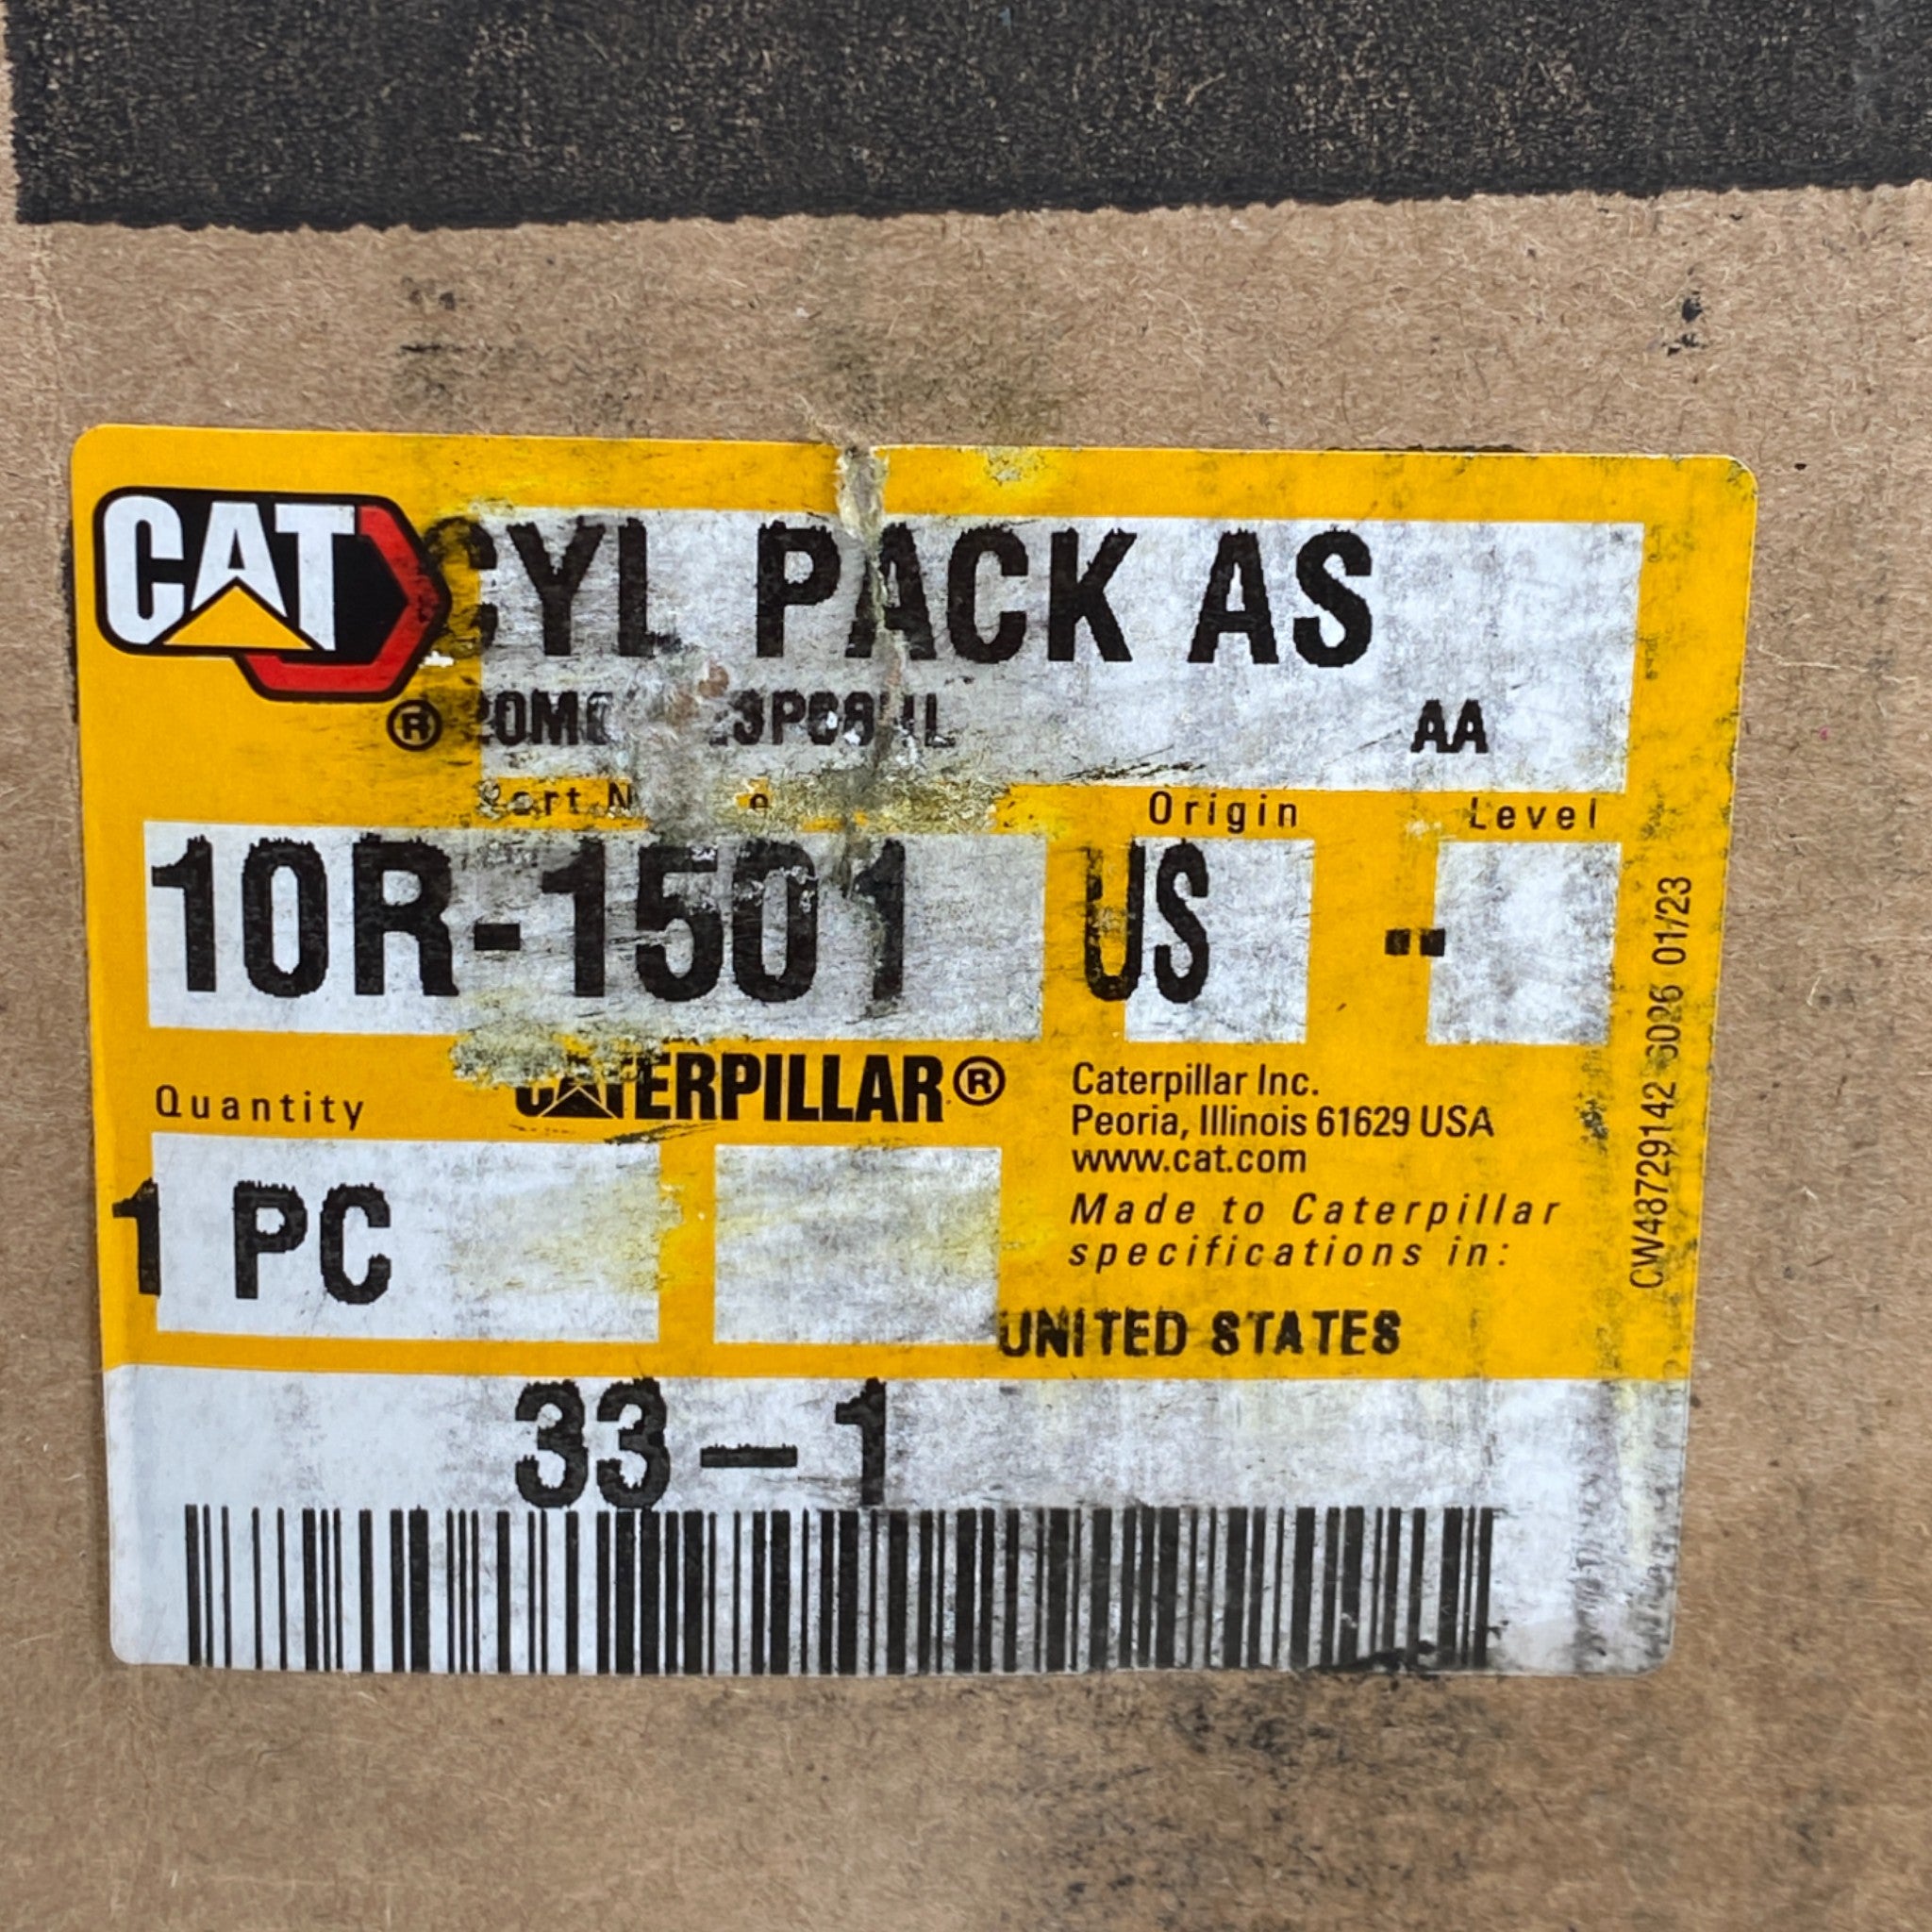 10R-1501 Genuine Cat Cylinder Pack